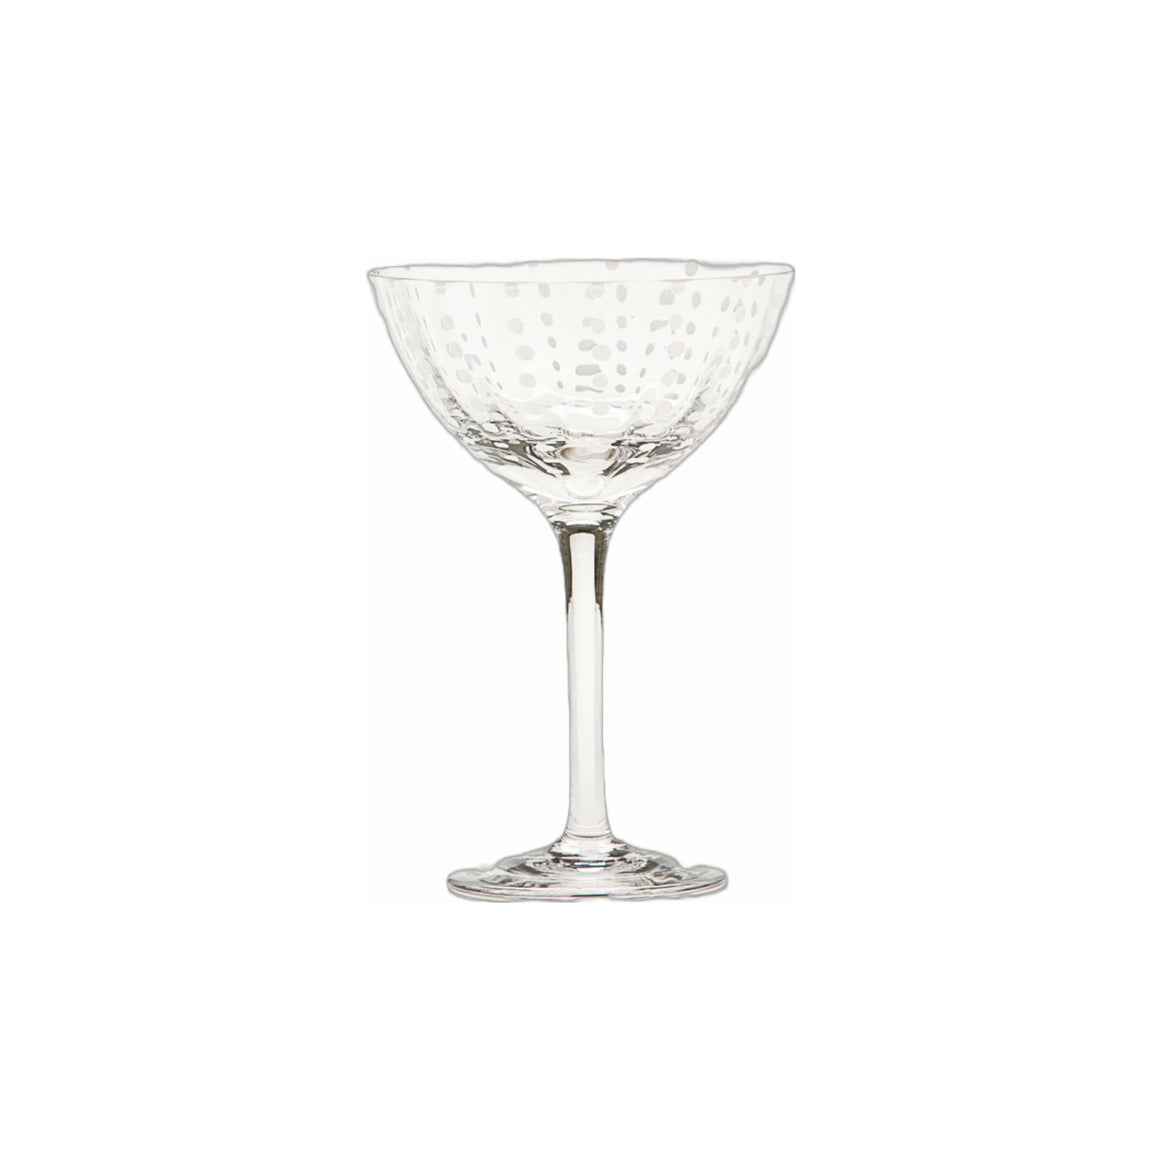 Perle Cocktail Goblet, Set of 2